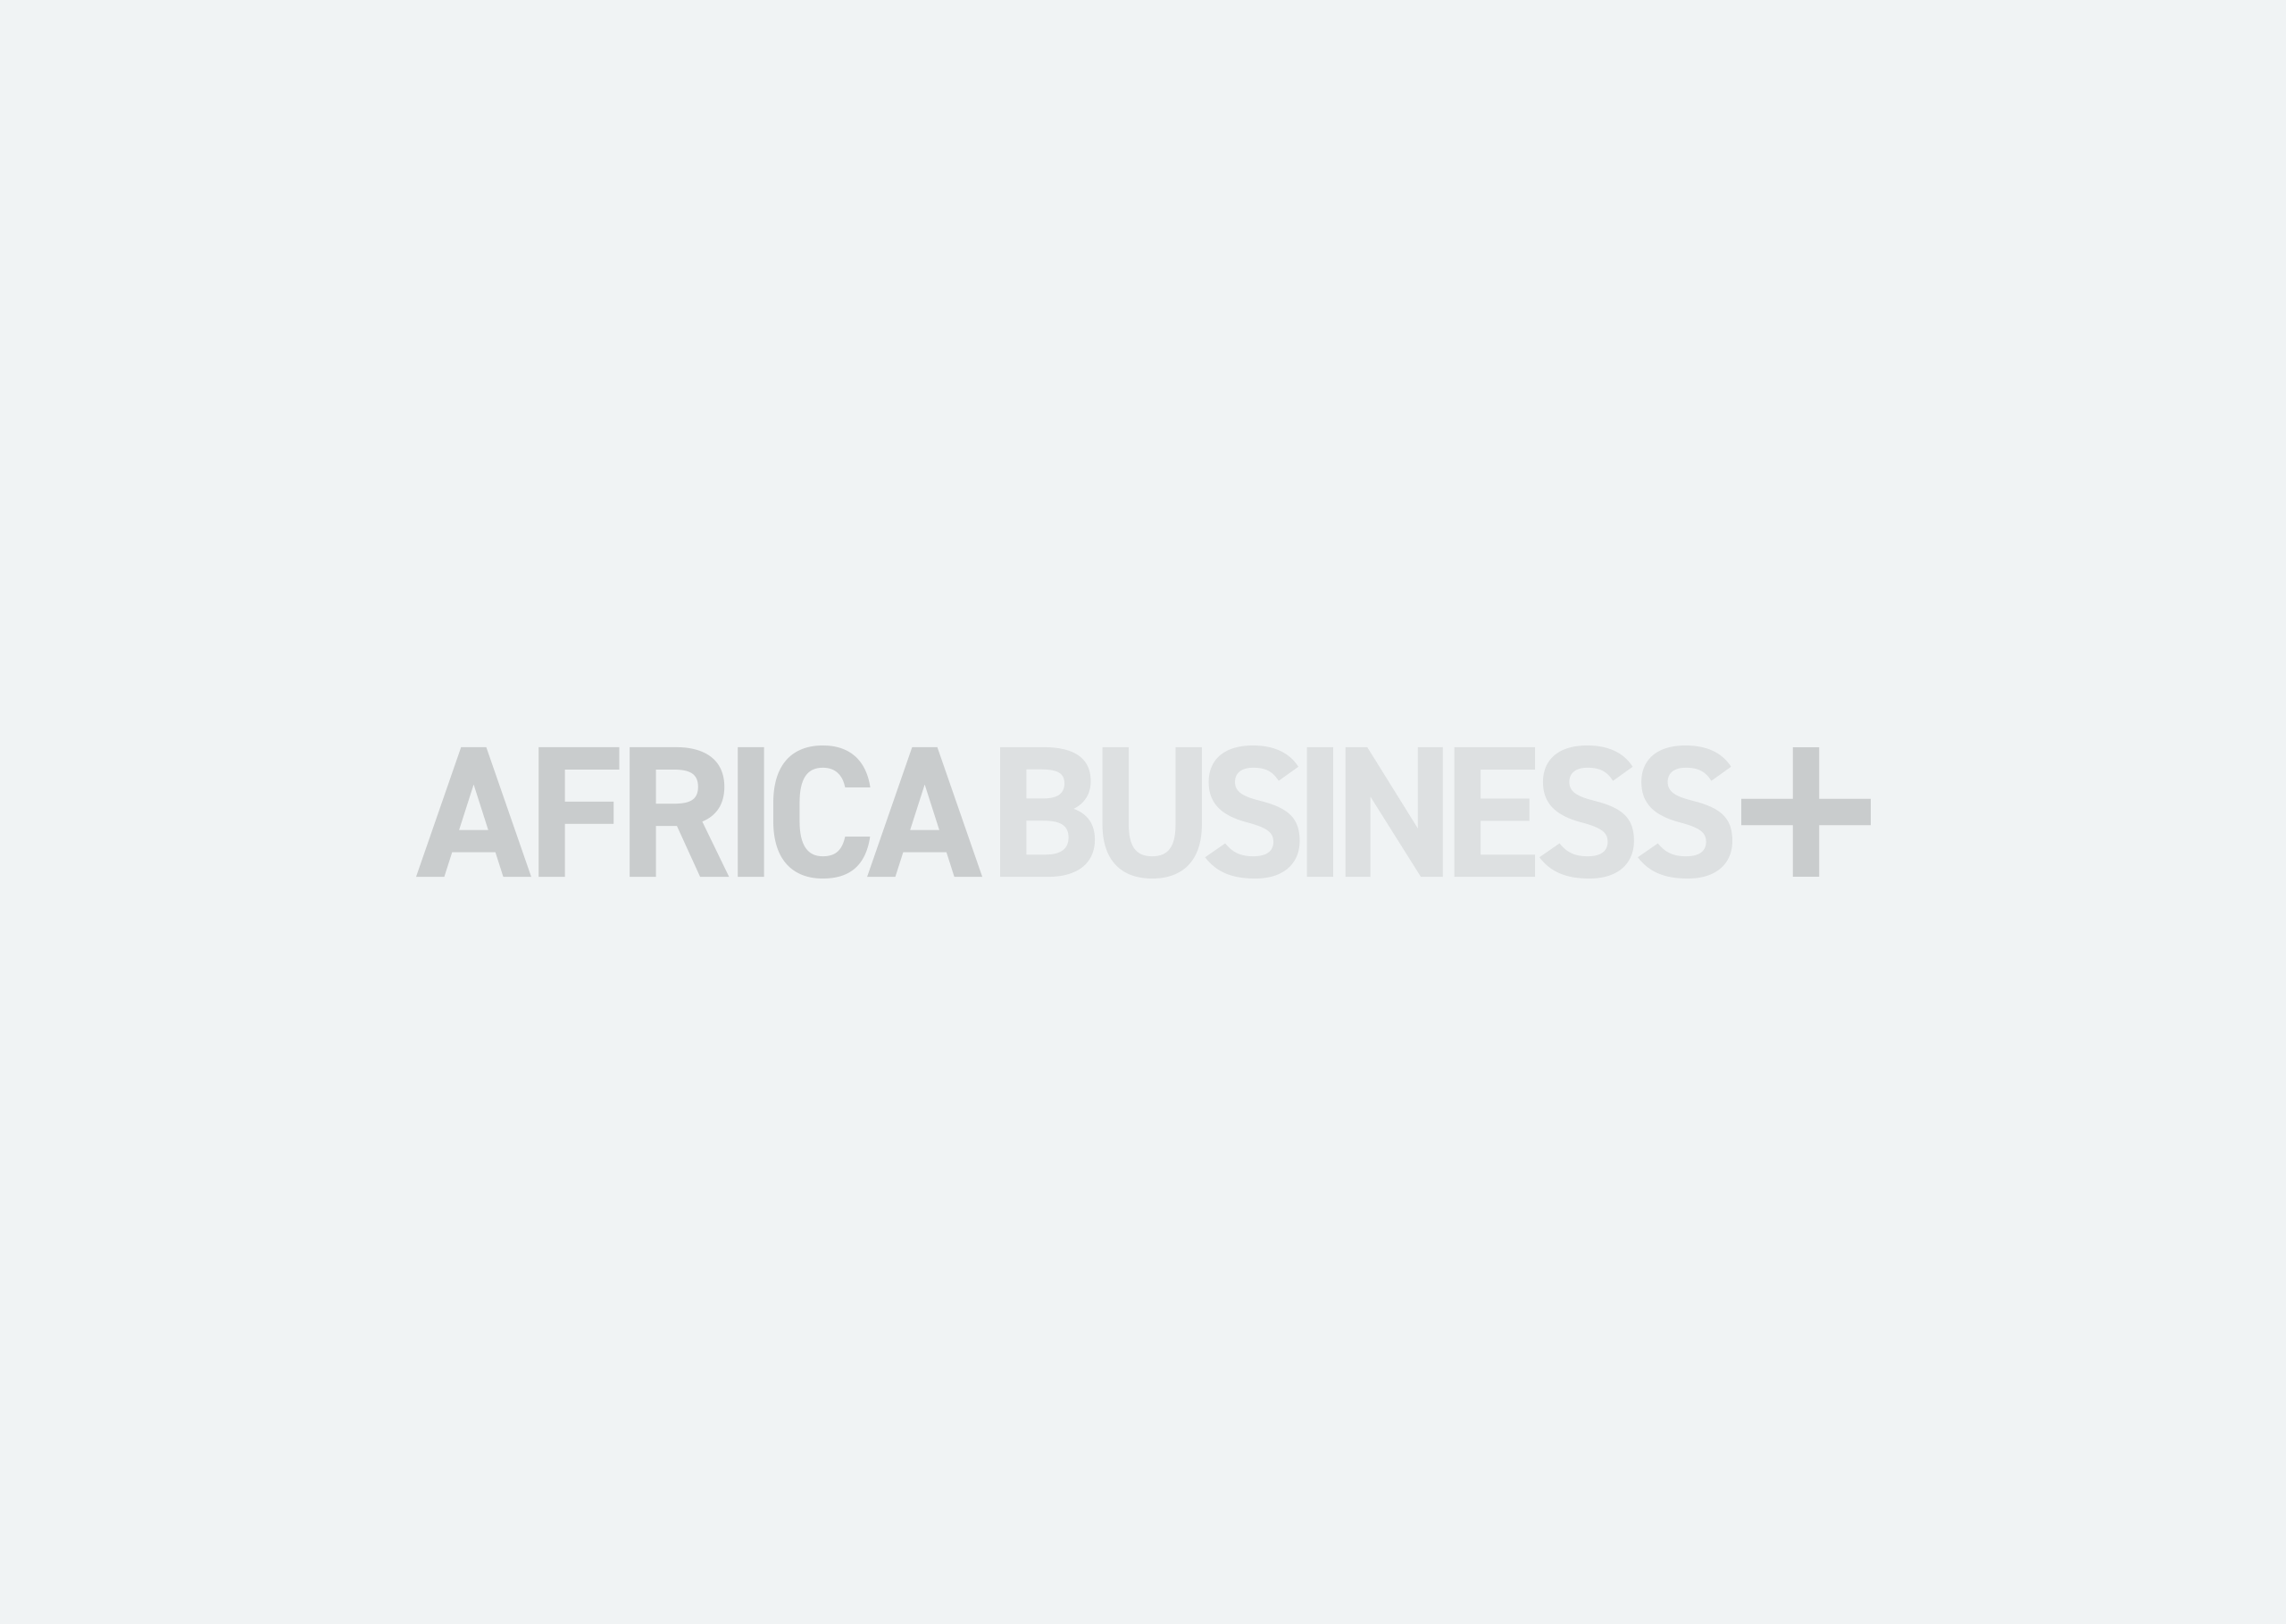 Africa Business+